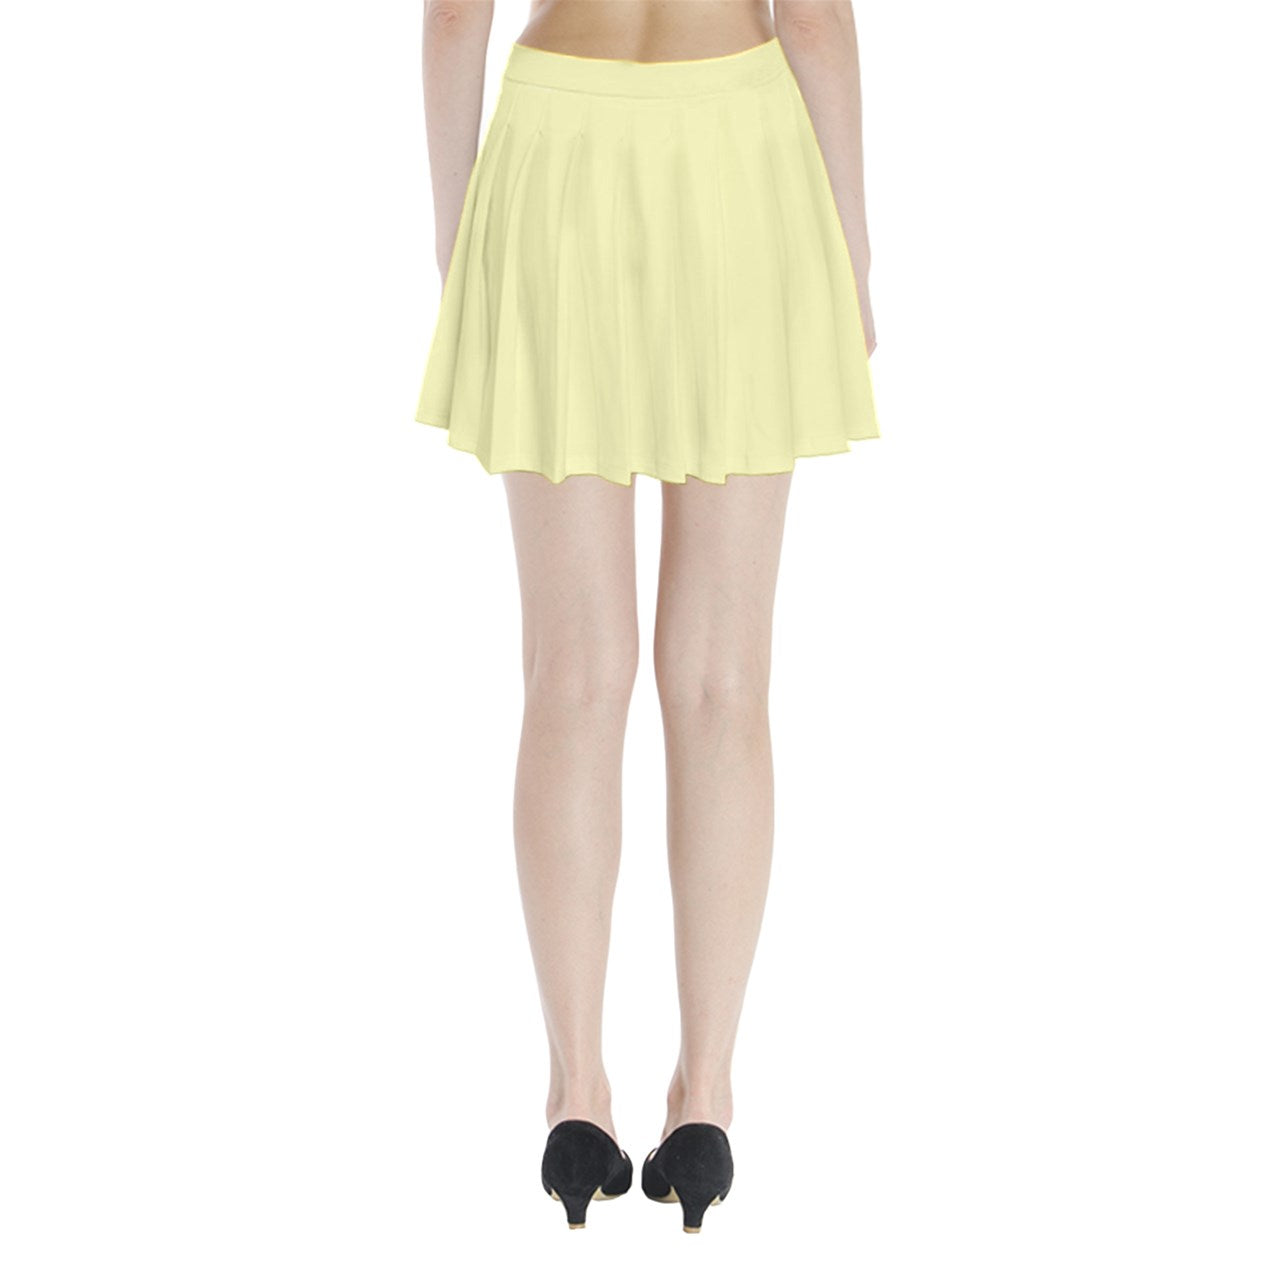 Icee Yellow Pleated Mini Skirt